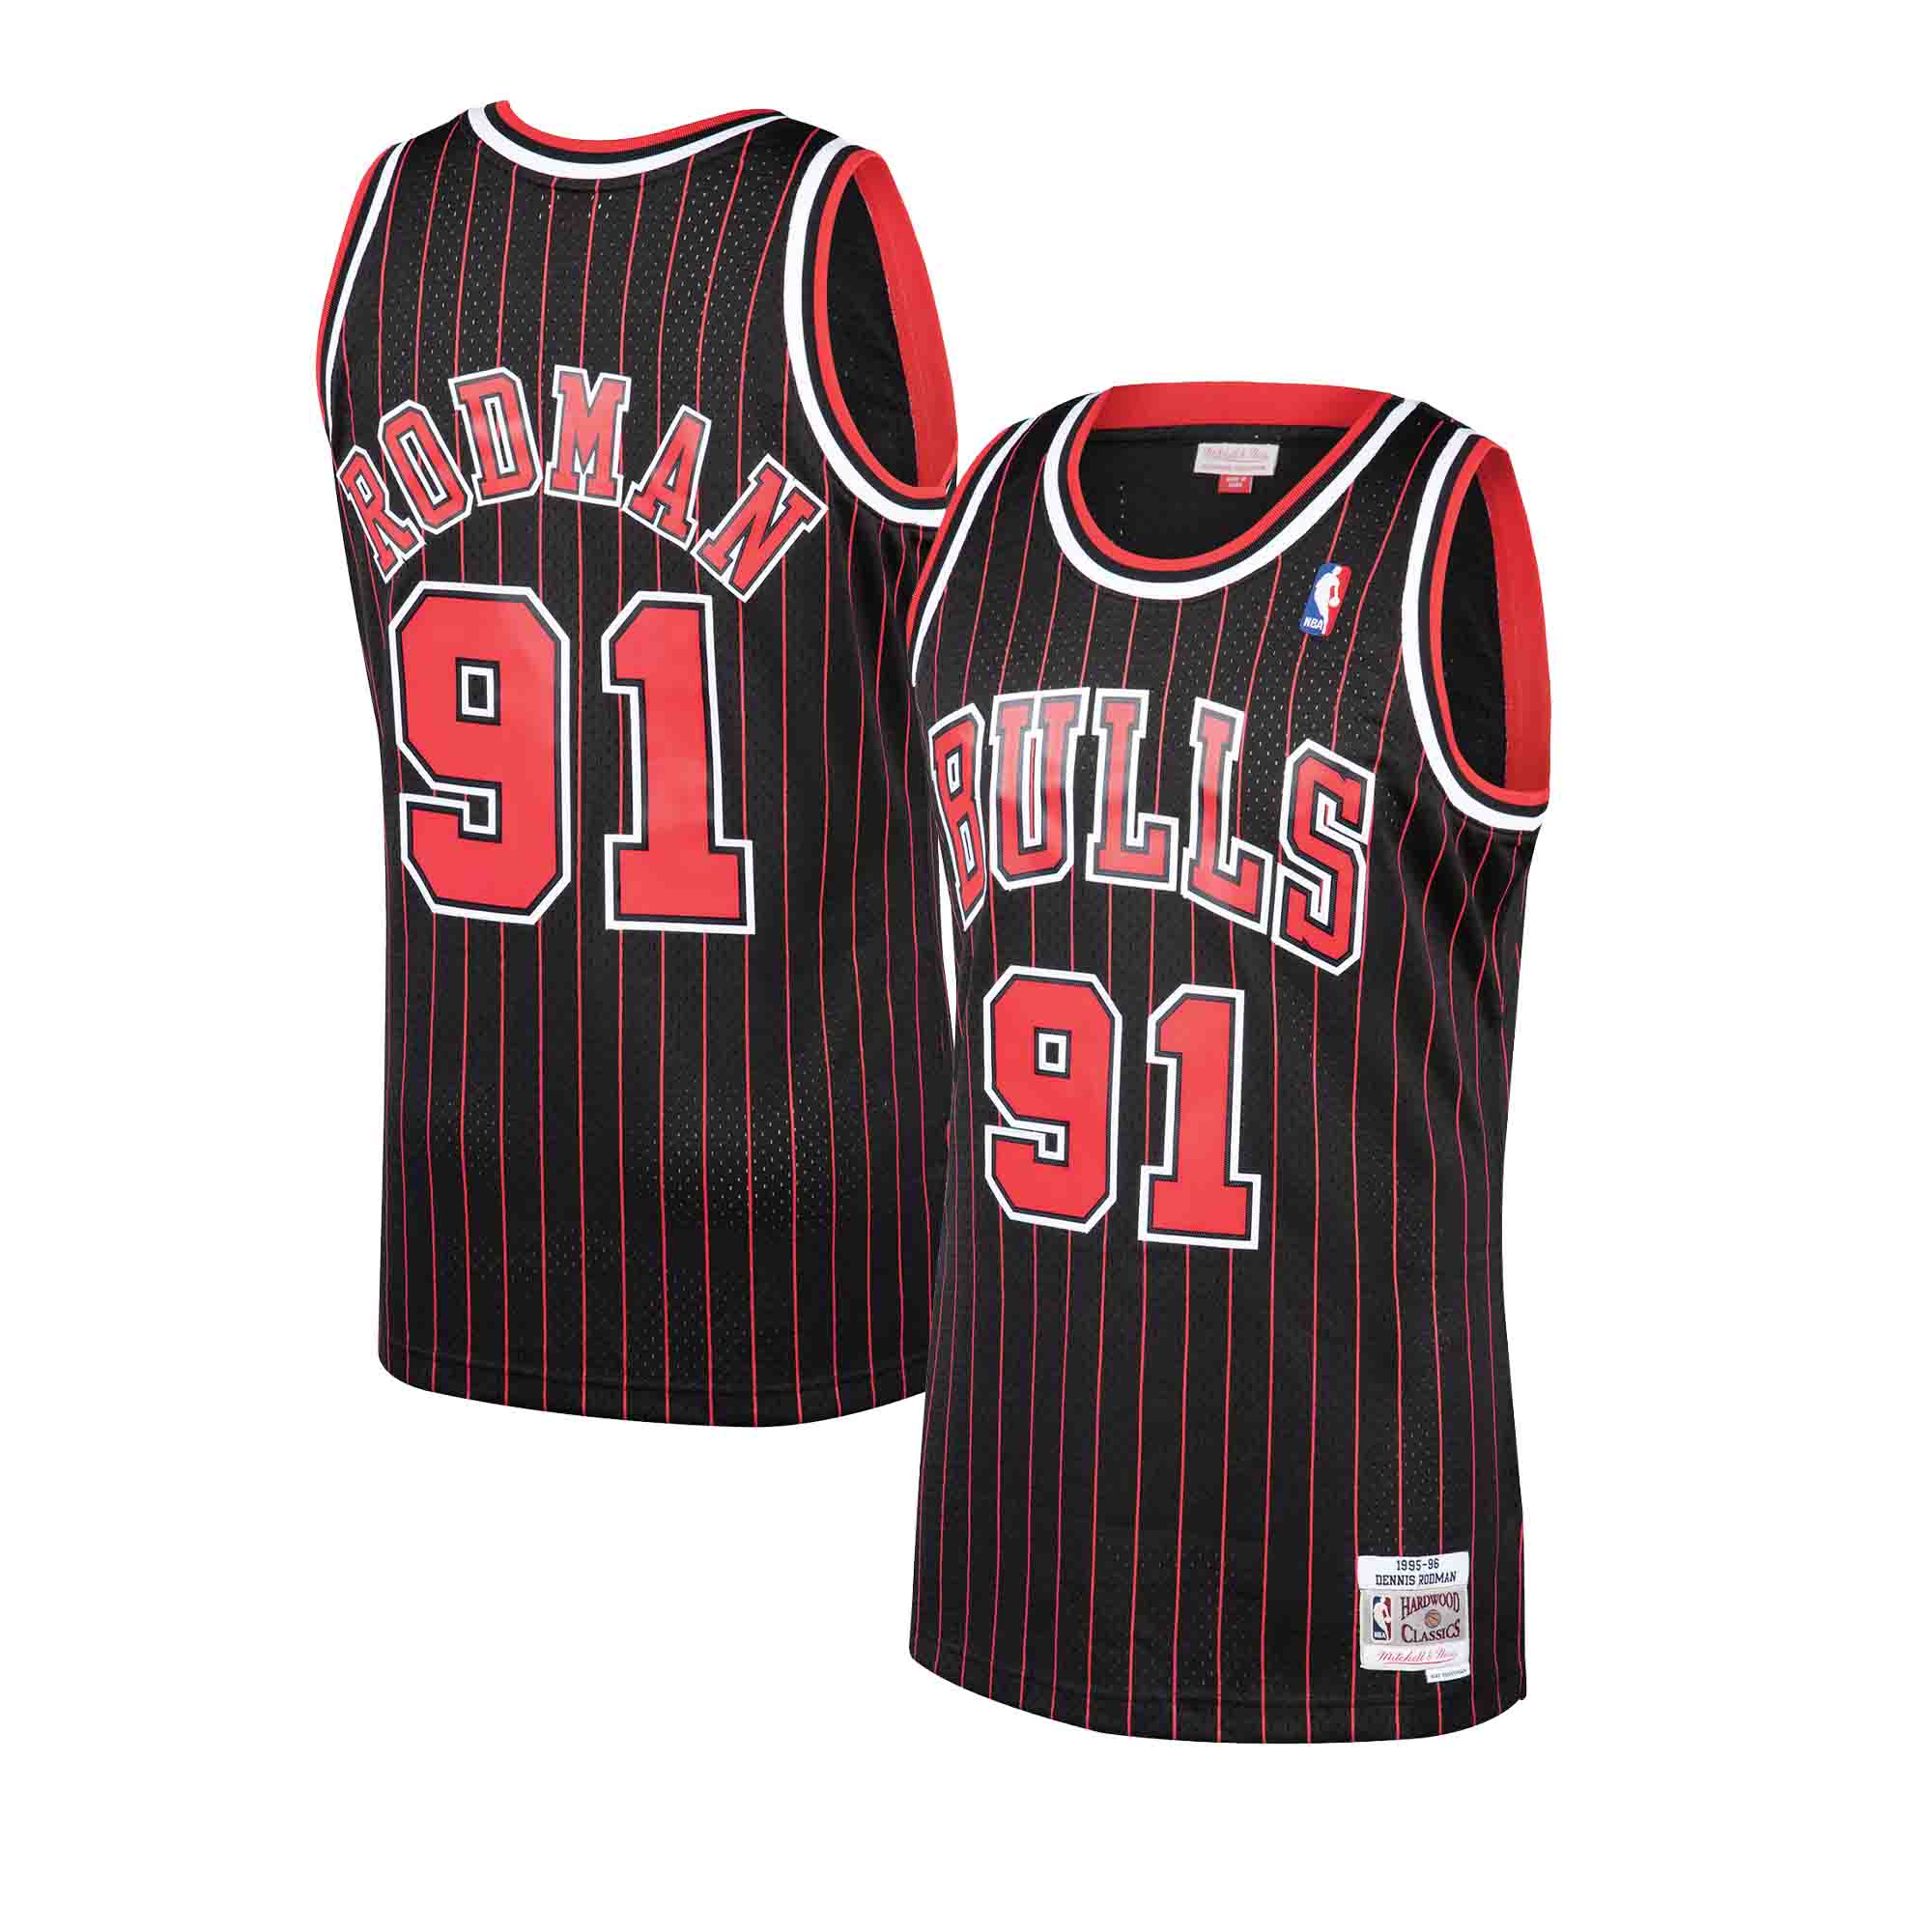 Dennis Rodman Chicago Bulls 1995-1996 Alternate Jersey - Rare